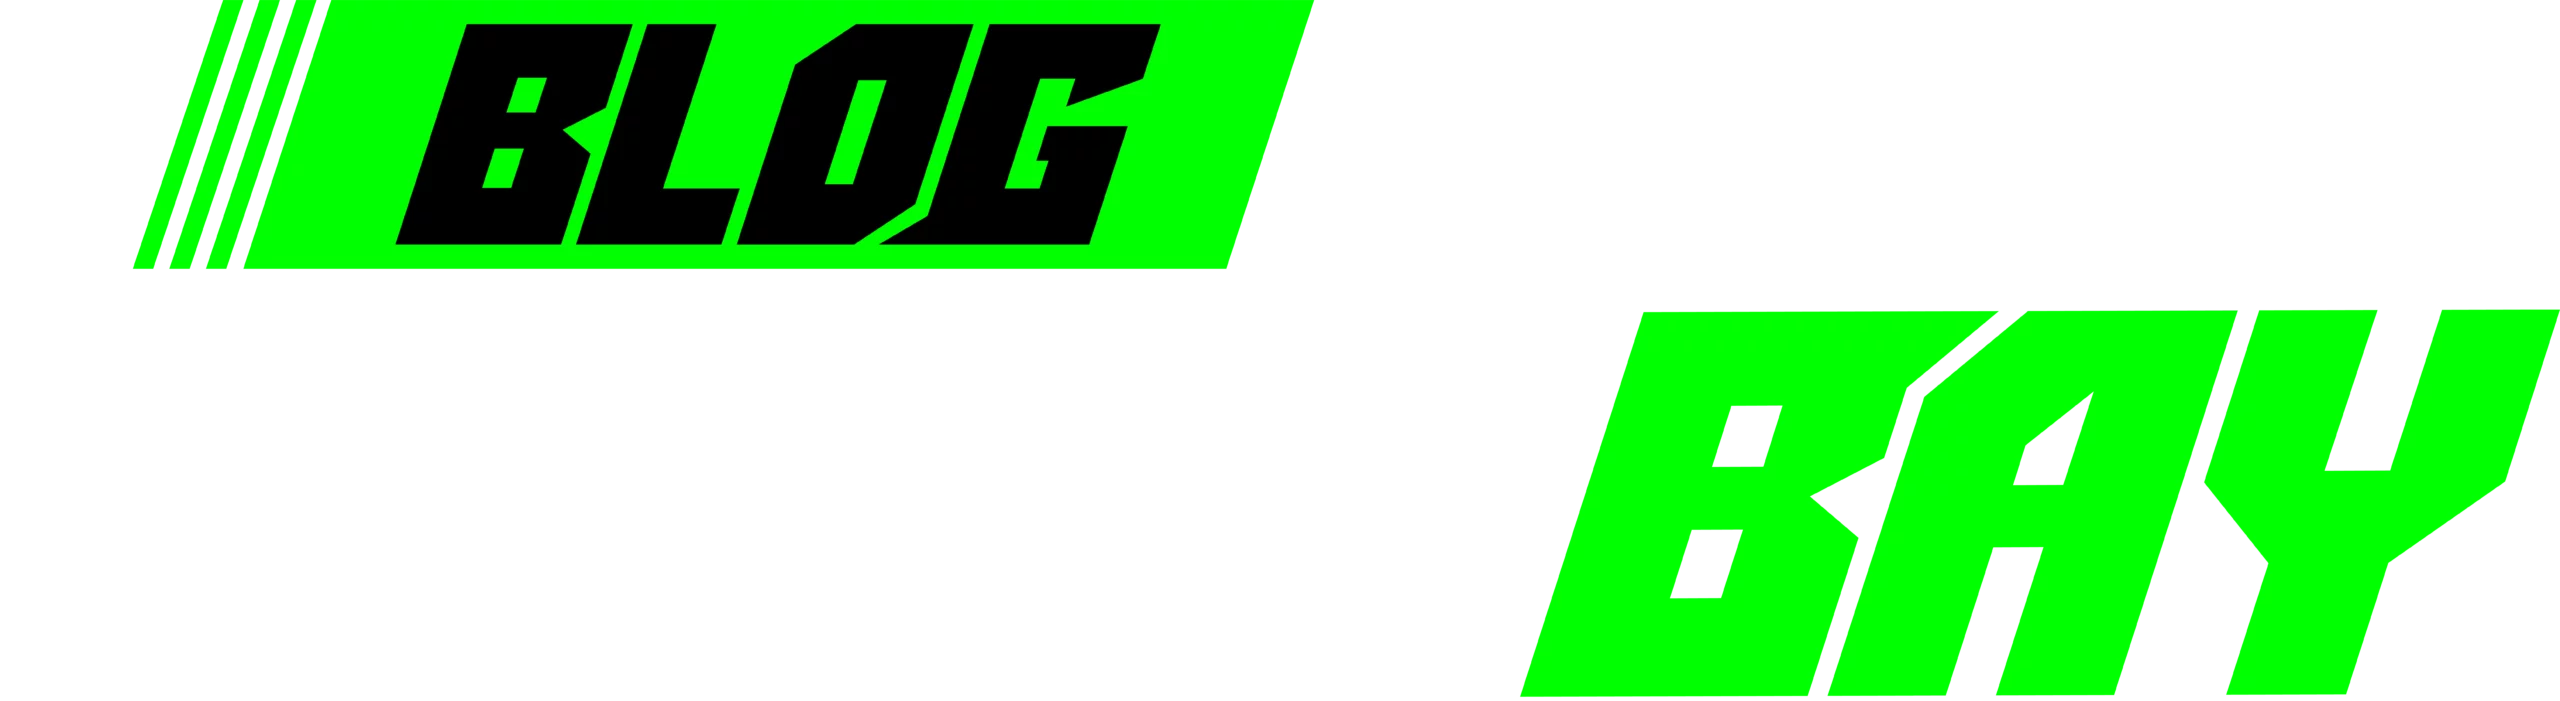 Sportbay logo